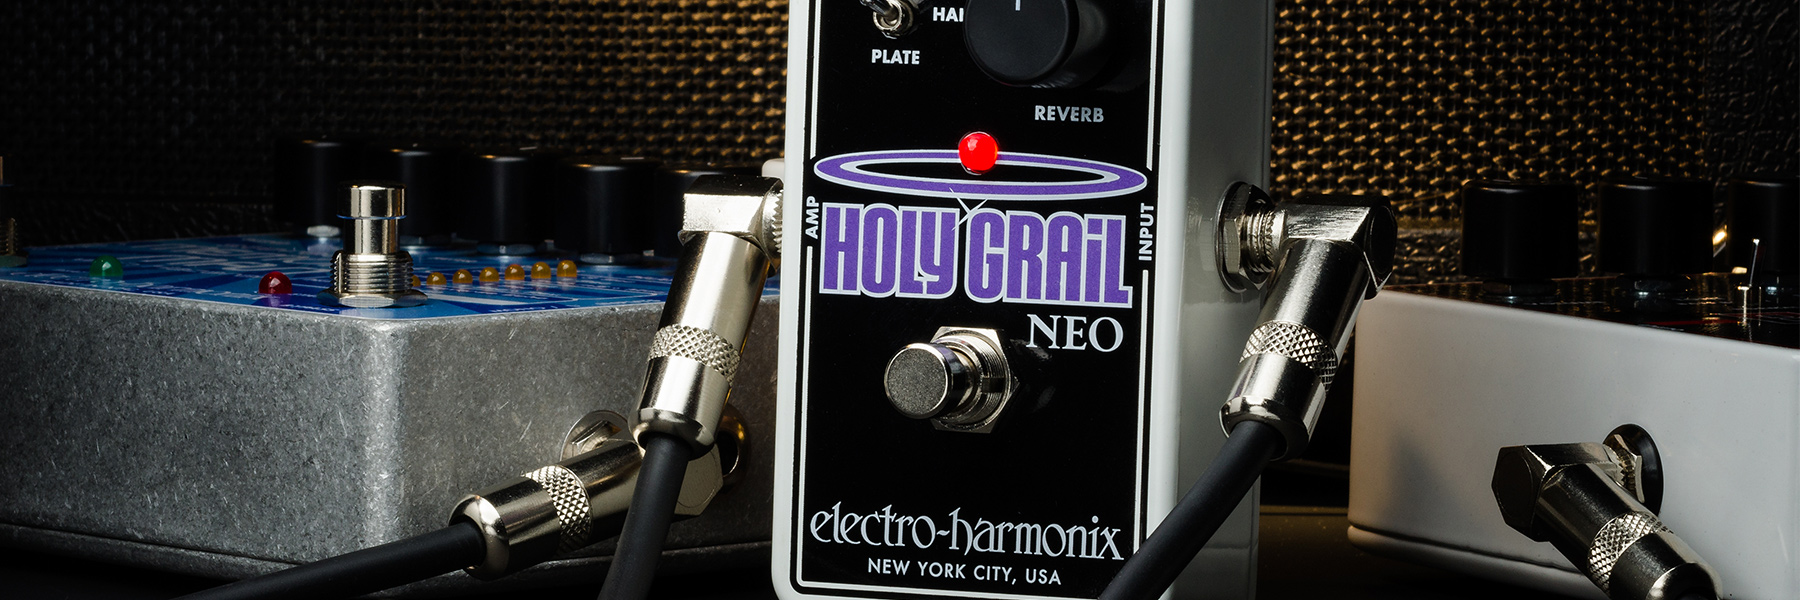 Holy Grail Neo | electro-harmonix -国内公式サイト-